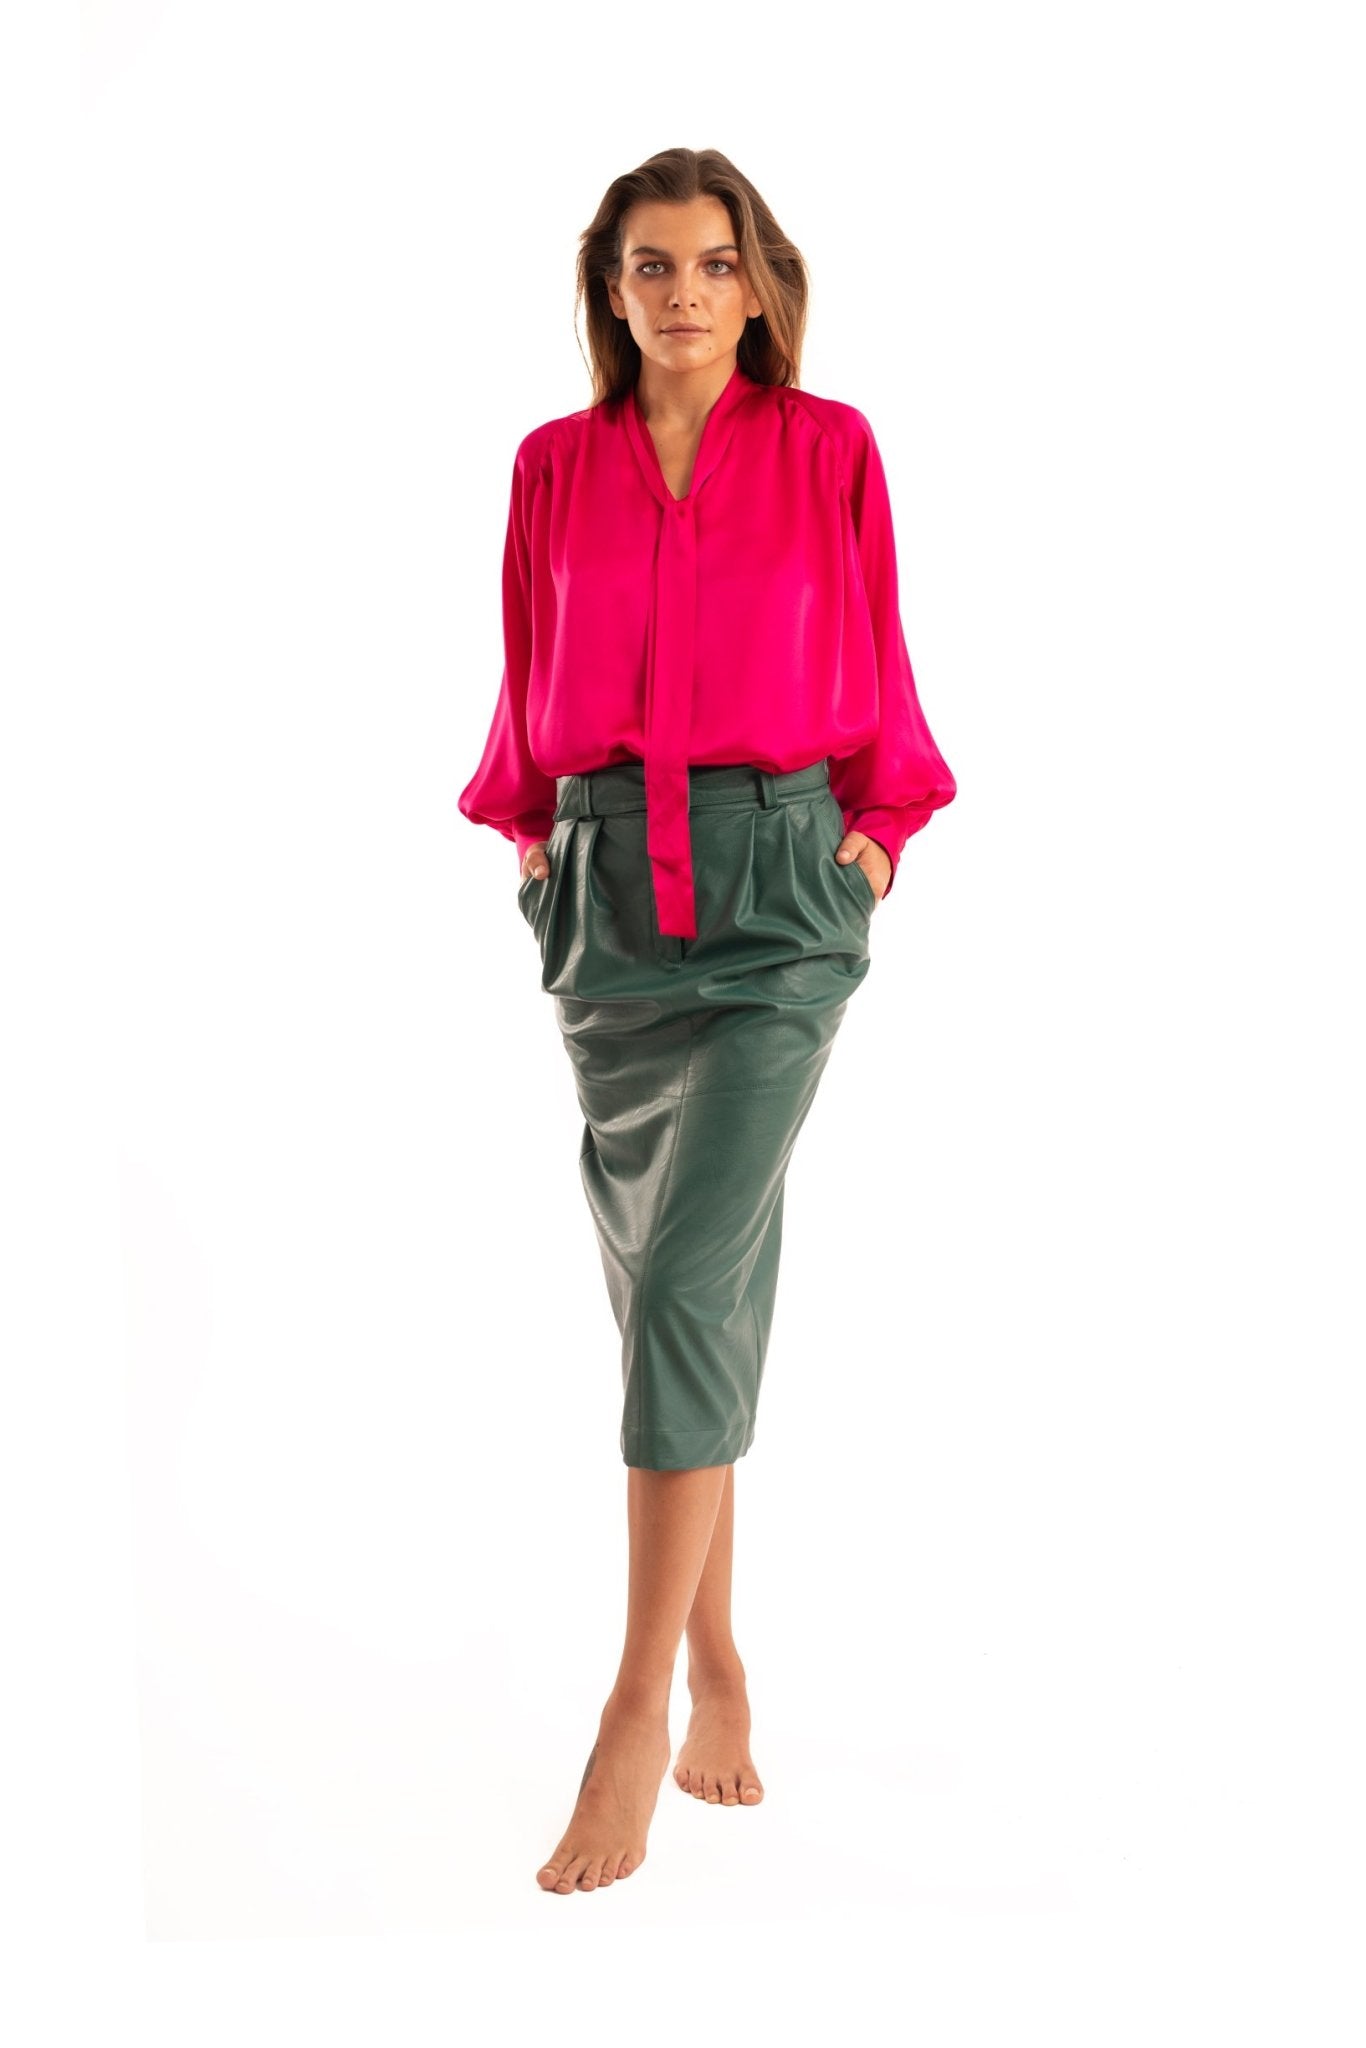 Green Midi Skirt - NOPIN - The Clothing LoungeNOPIN